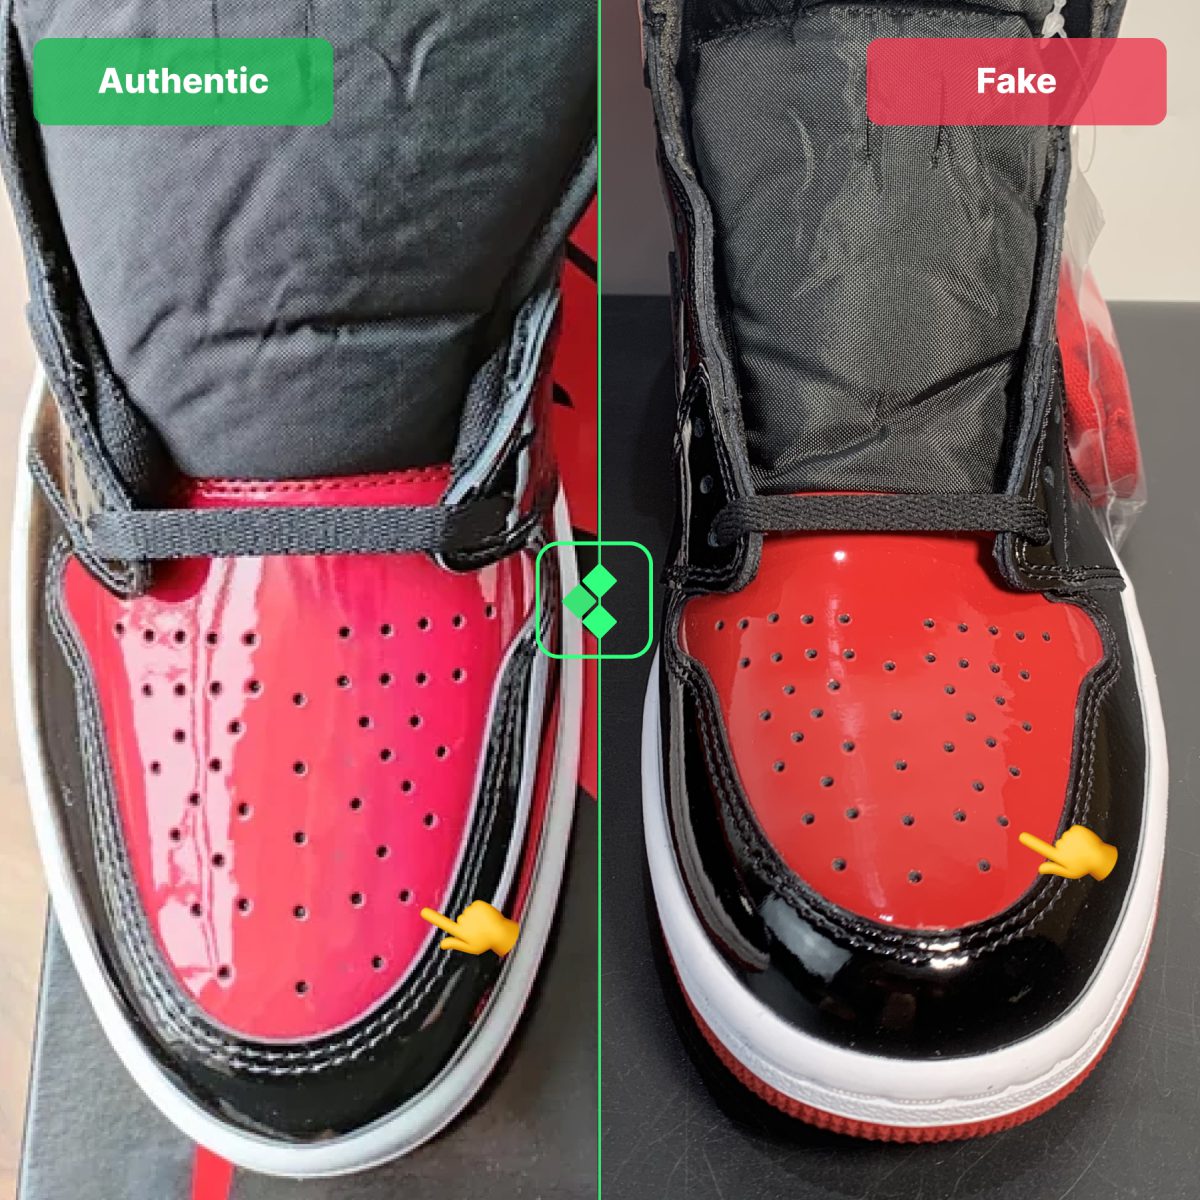 Jordan 1 Patent Bred Fake Vs Real: Toe Box